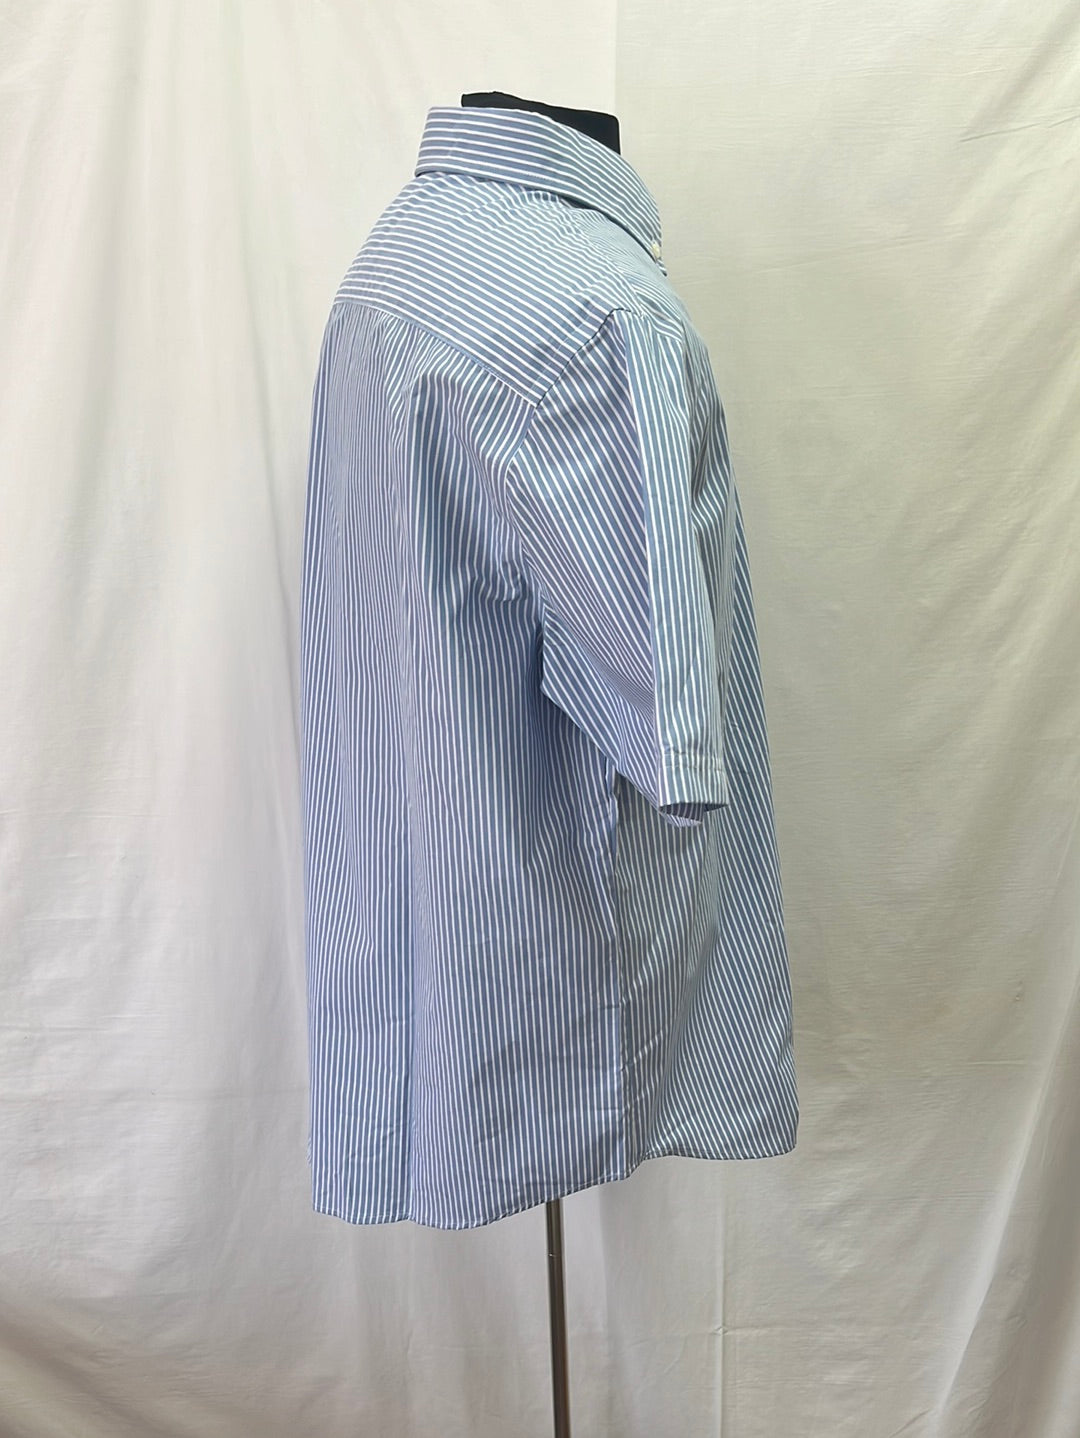 NWT - CROFT & BARROW Blue Stripe Easy Care Short-Sleeve Shirt -  L